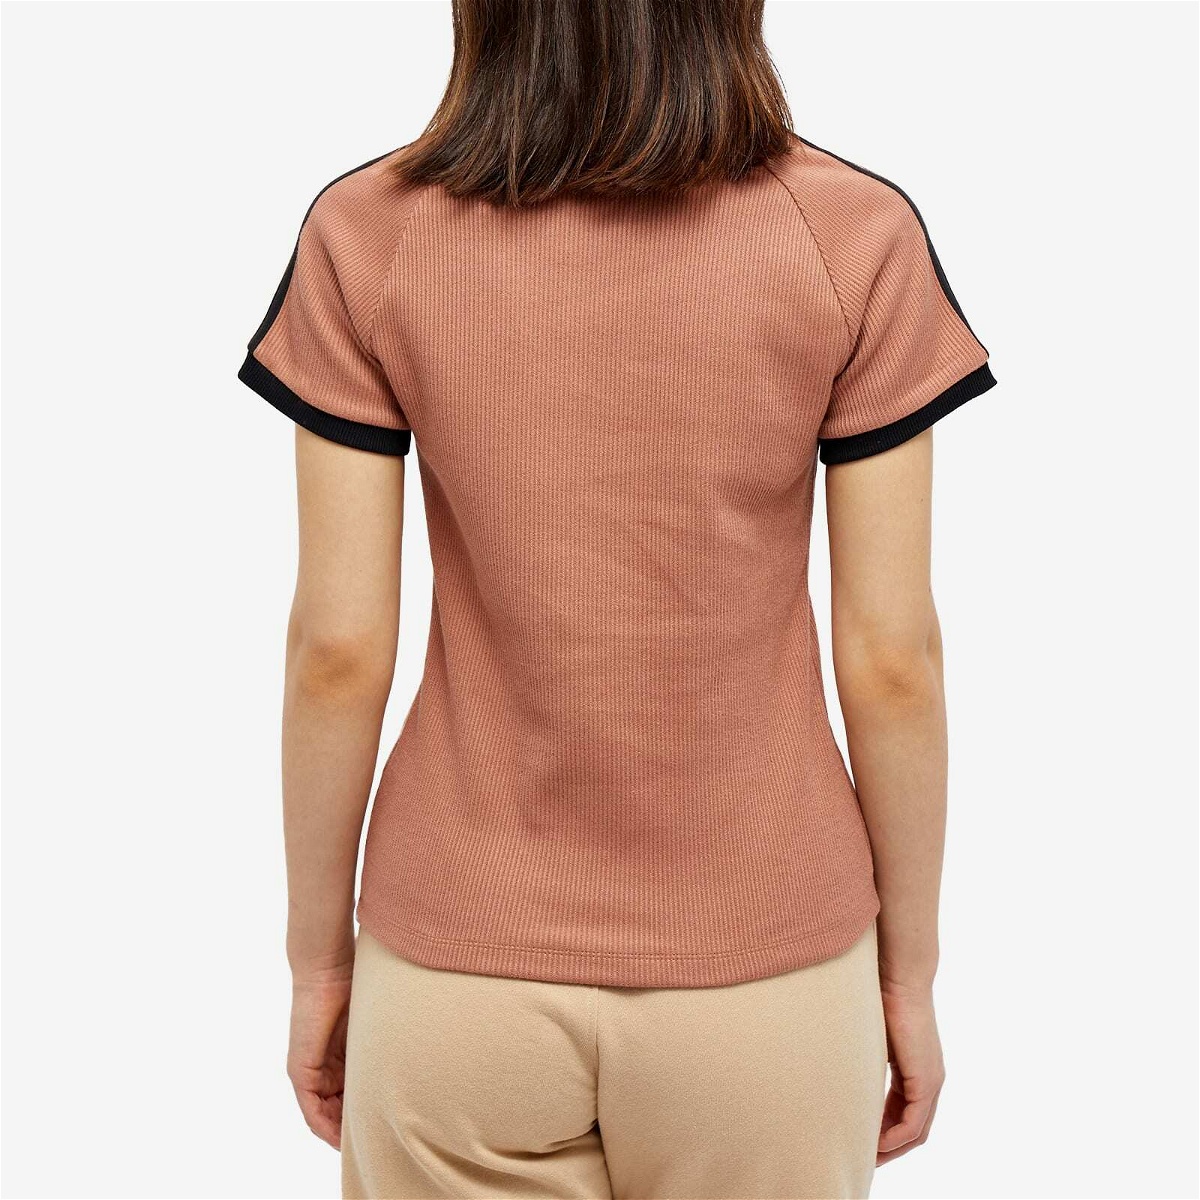 Adidas Women\'s 3-Stripe Slim T-Shirt in Clay Strata adidas